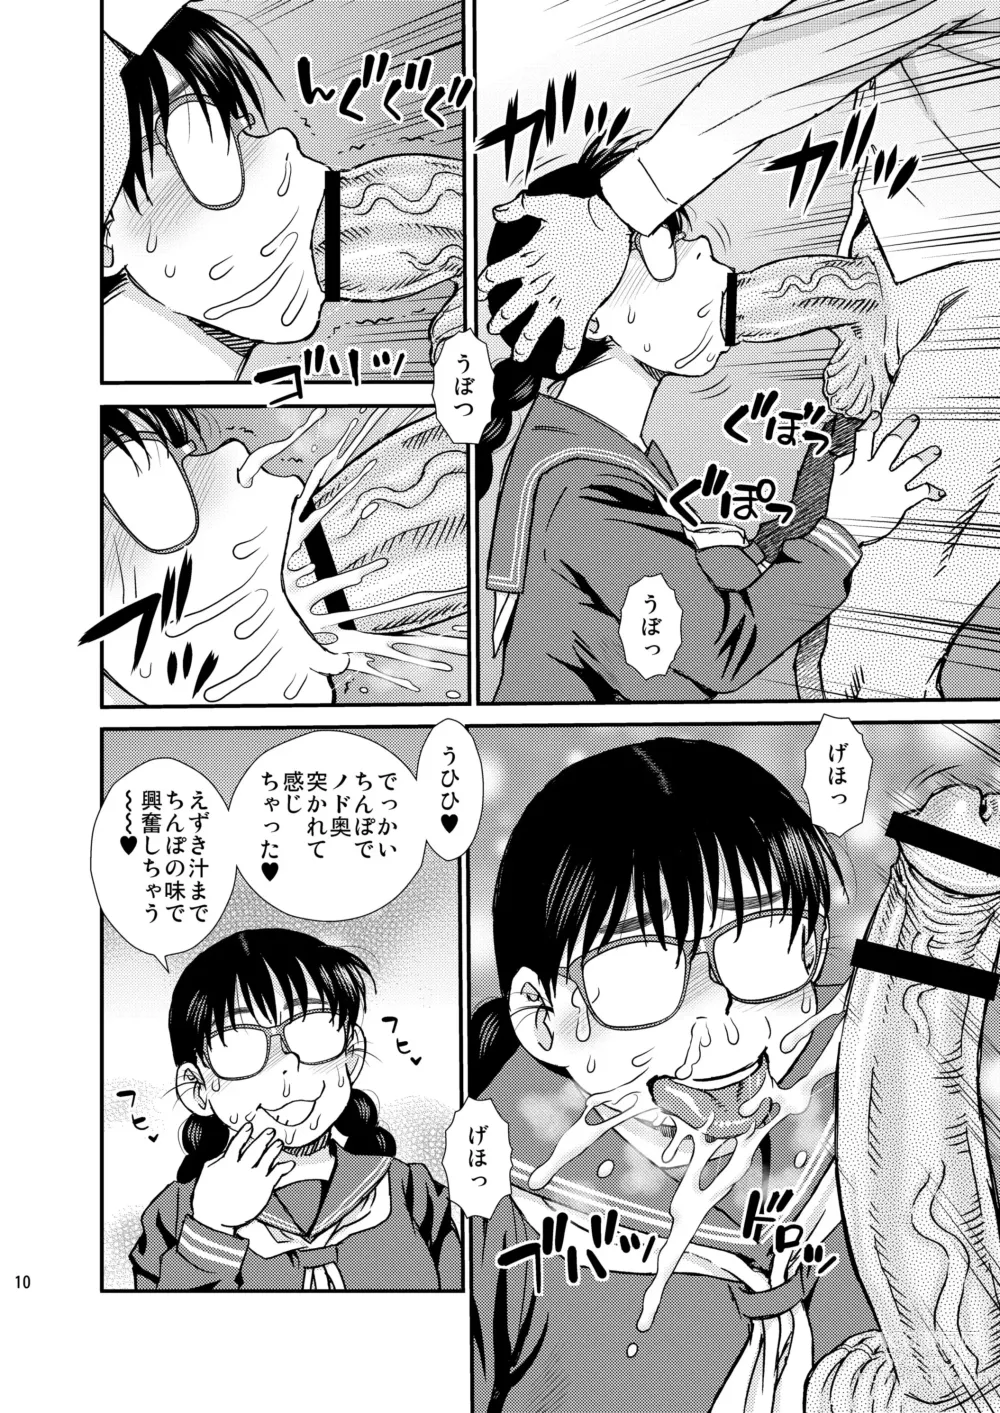 Page 9 of doujinshi Tatsumi-san no